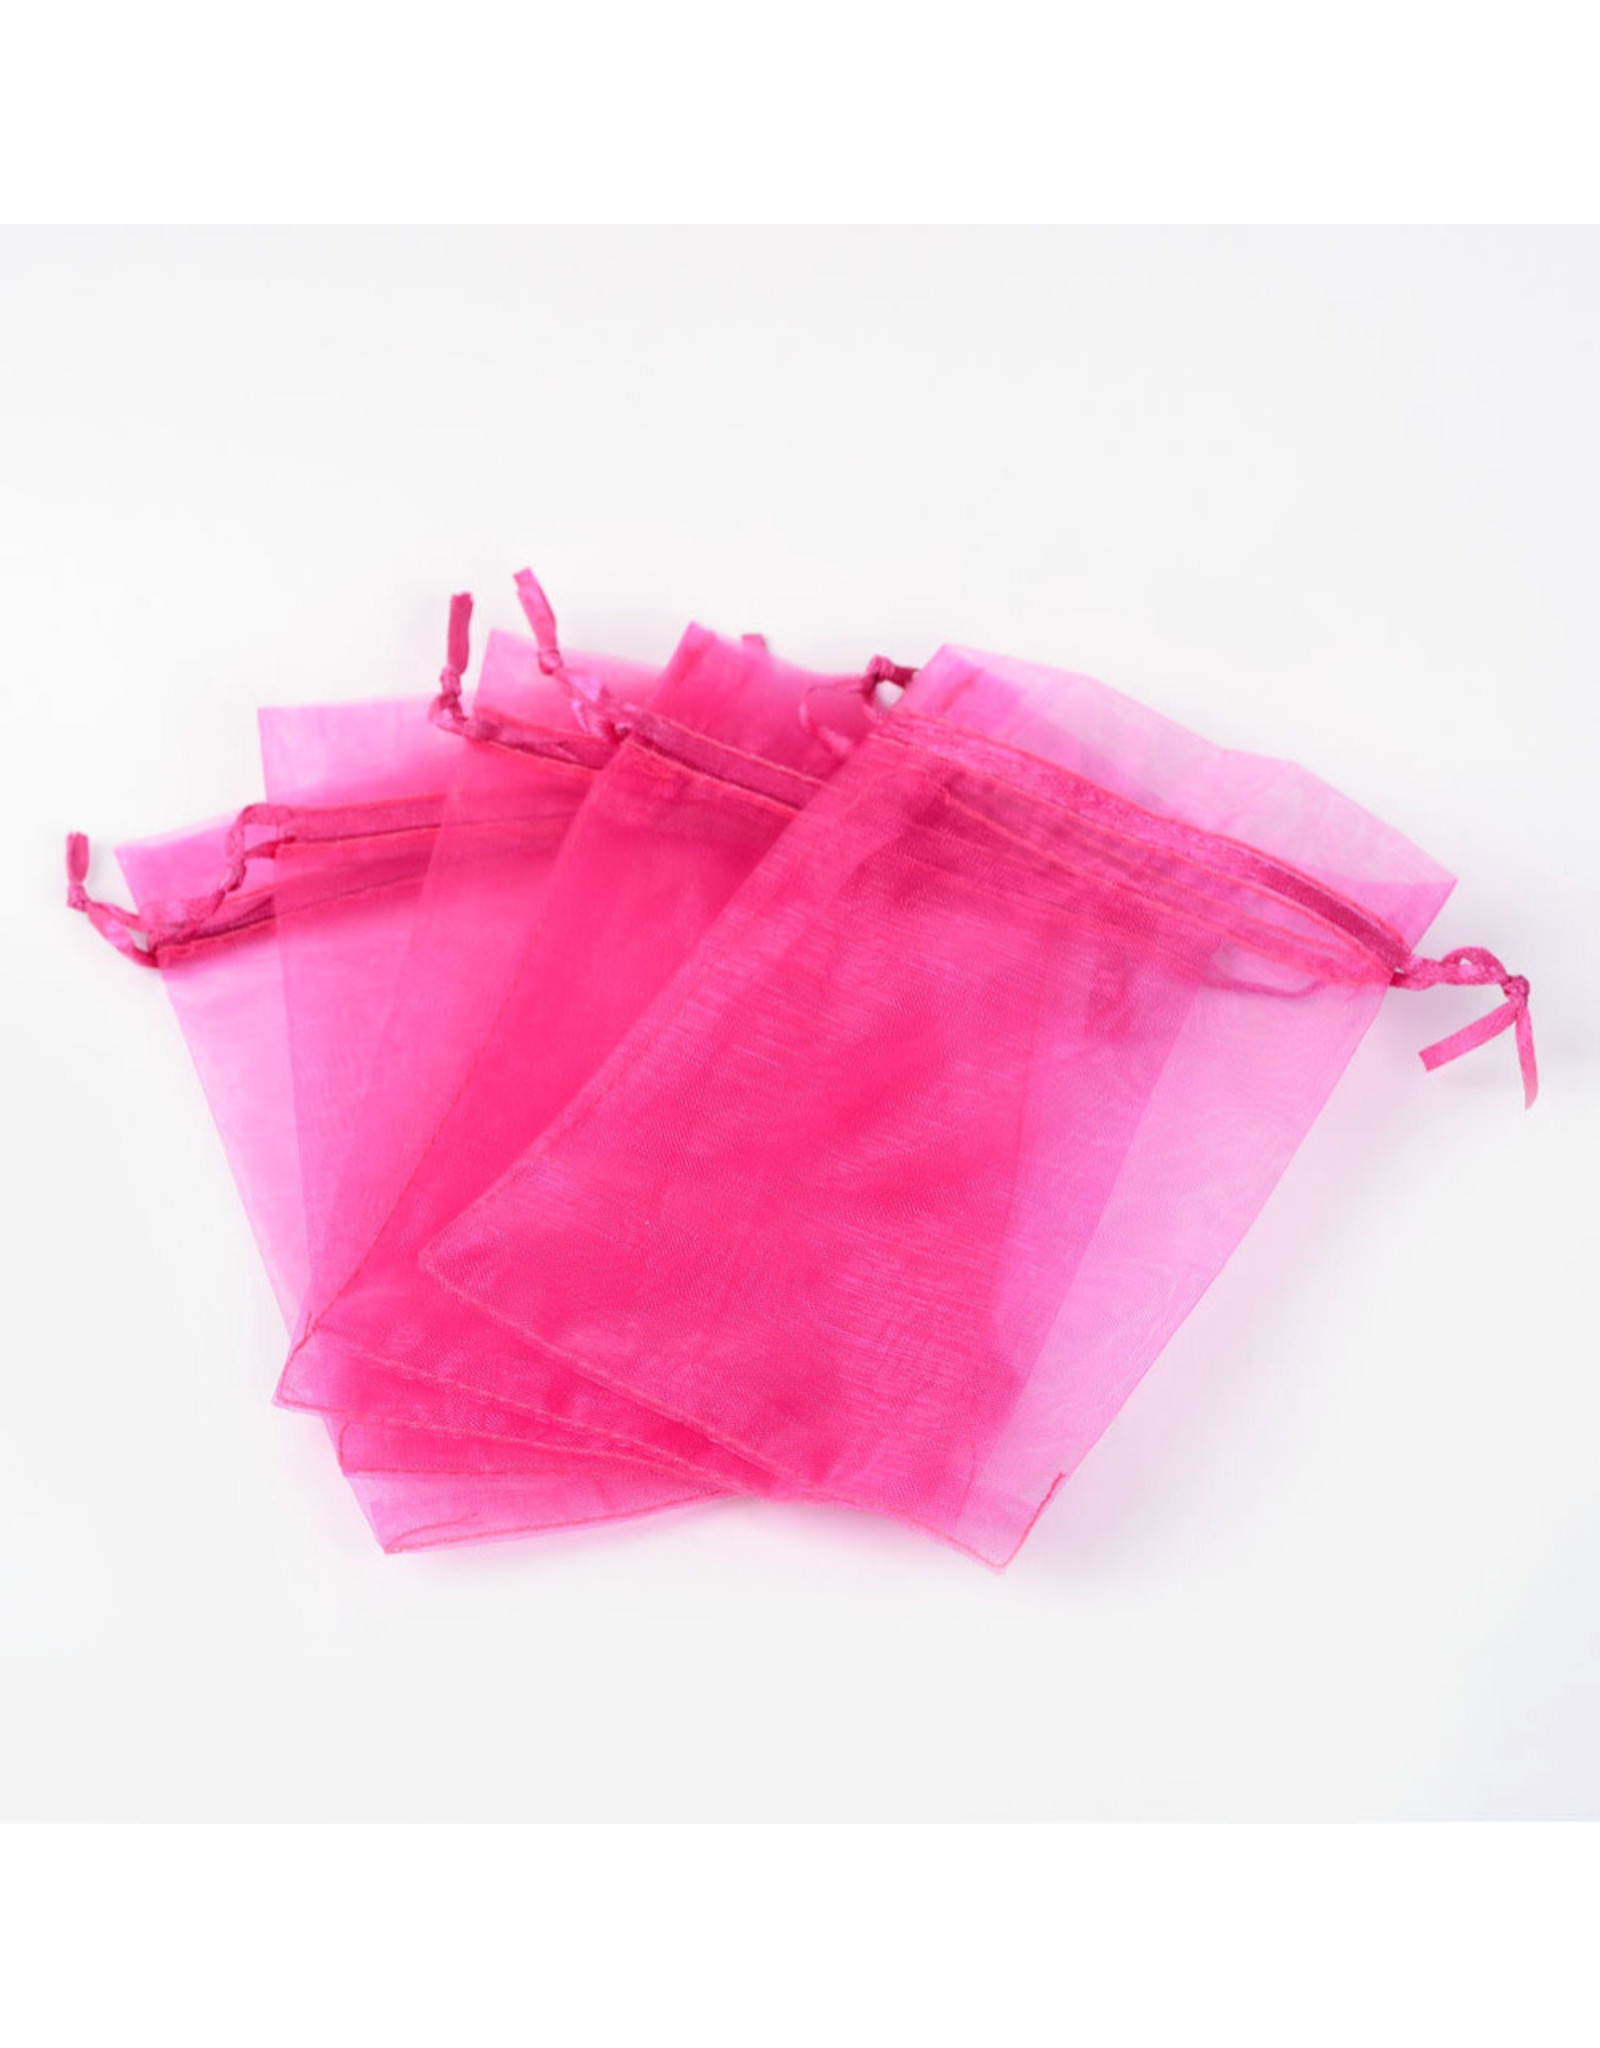 Organza Gift Bag Pink  15x10cm  x10